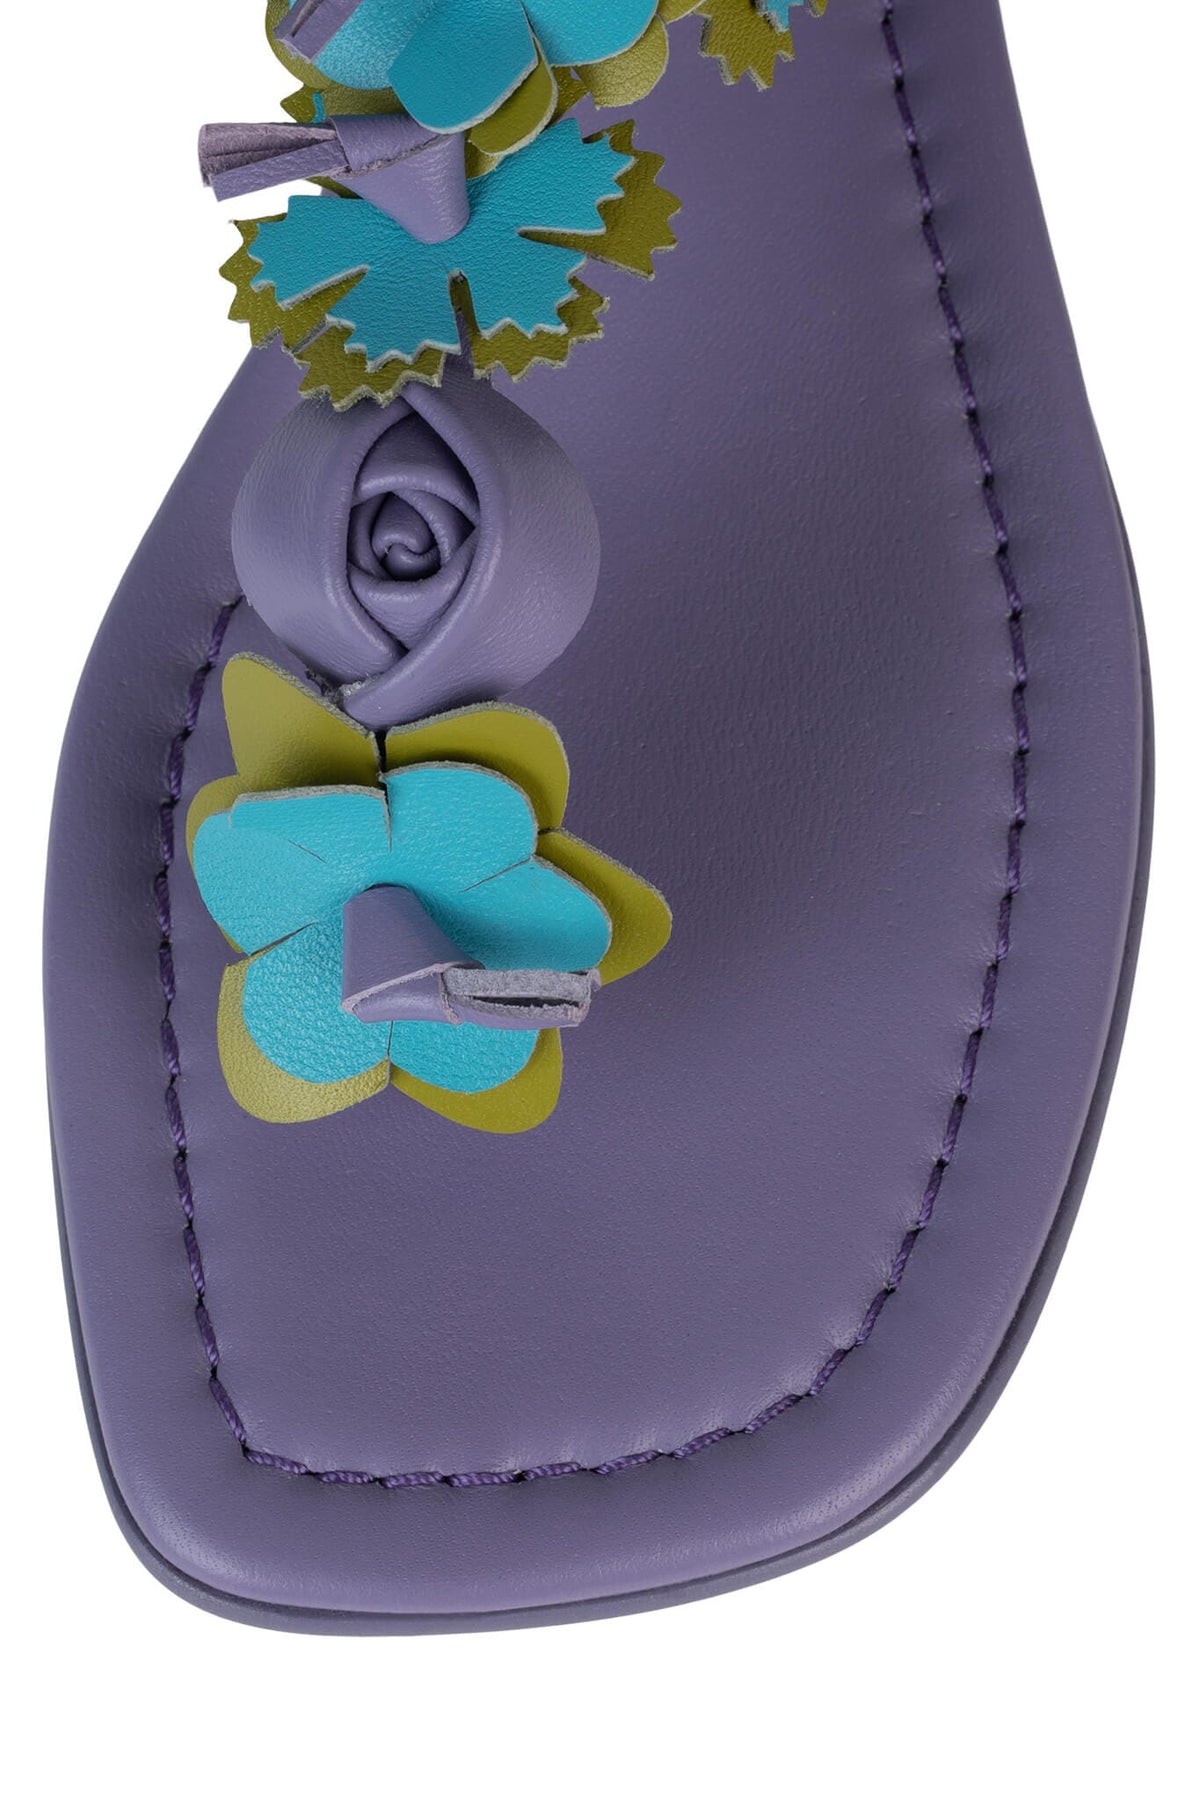 DIANTHUS Jeffrey Campbell Flat Sandals Purple Blue Yellow Combo